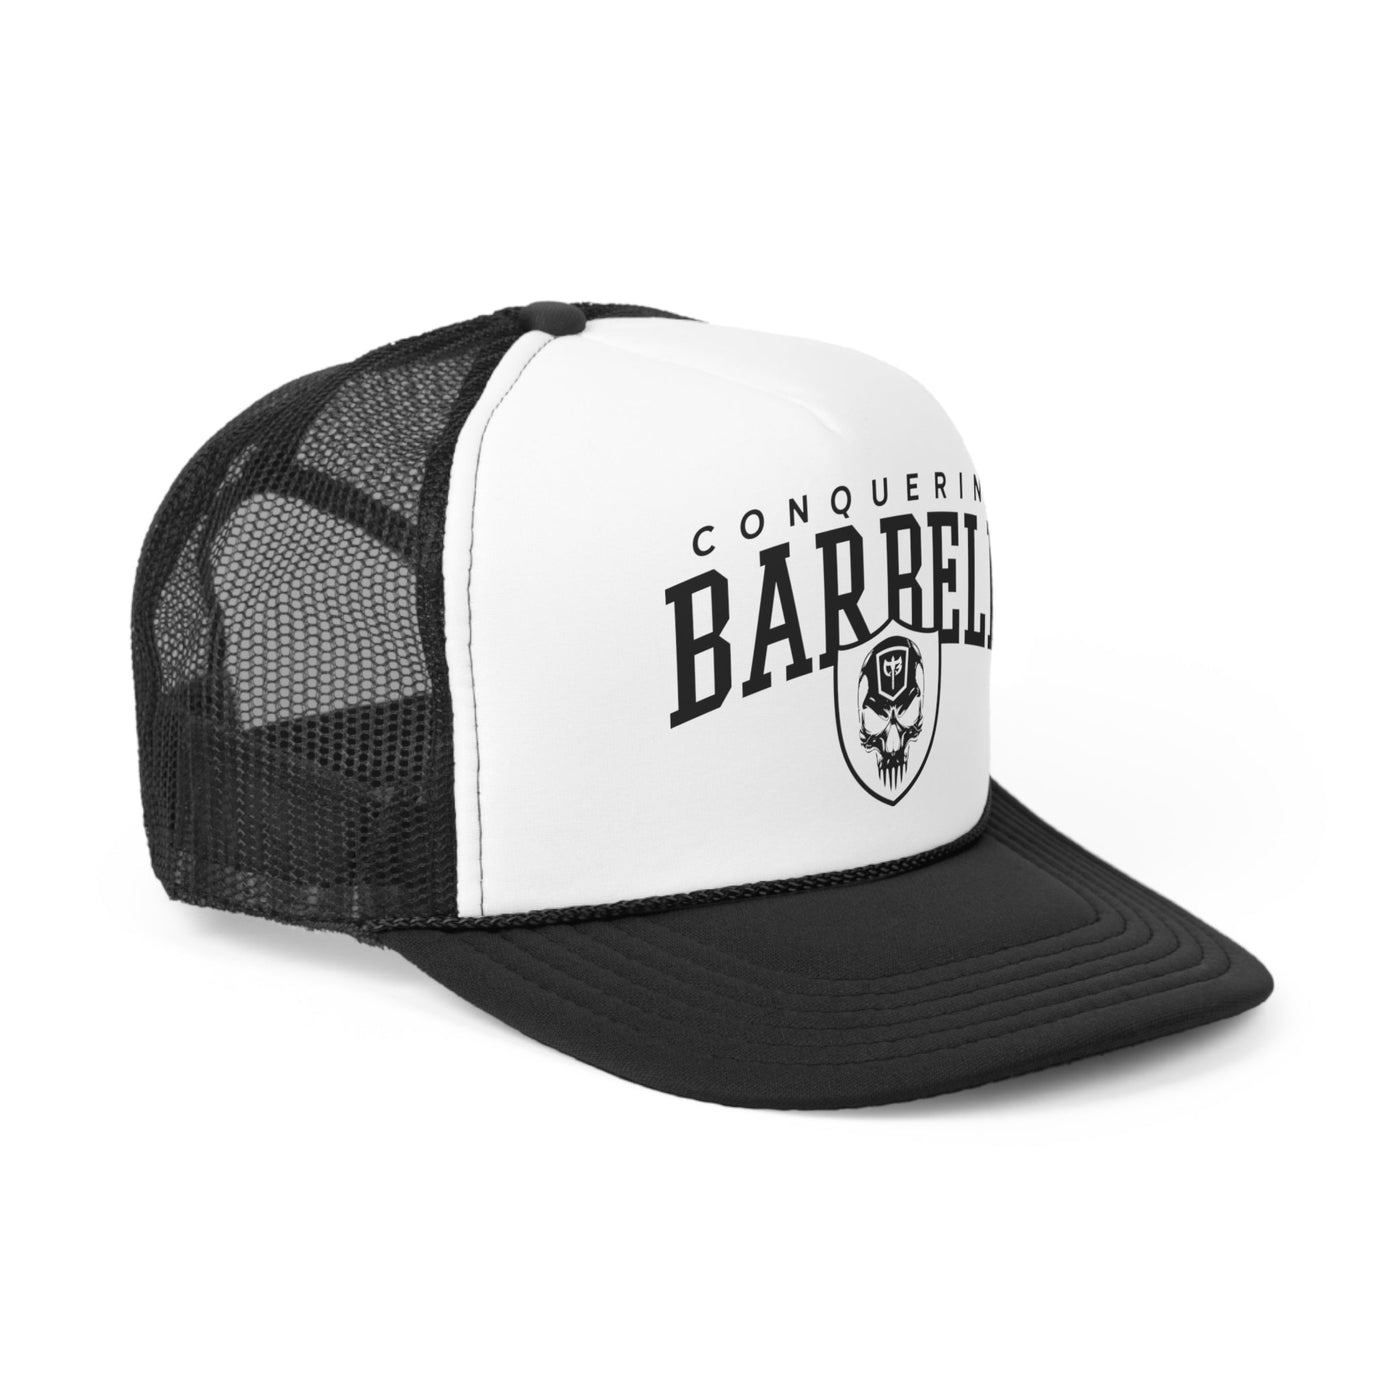 CB Athletics - Black/White Trucker Cap - Conquering Barbell